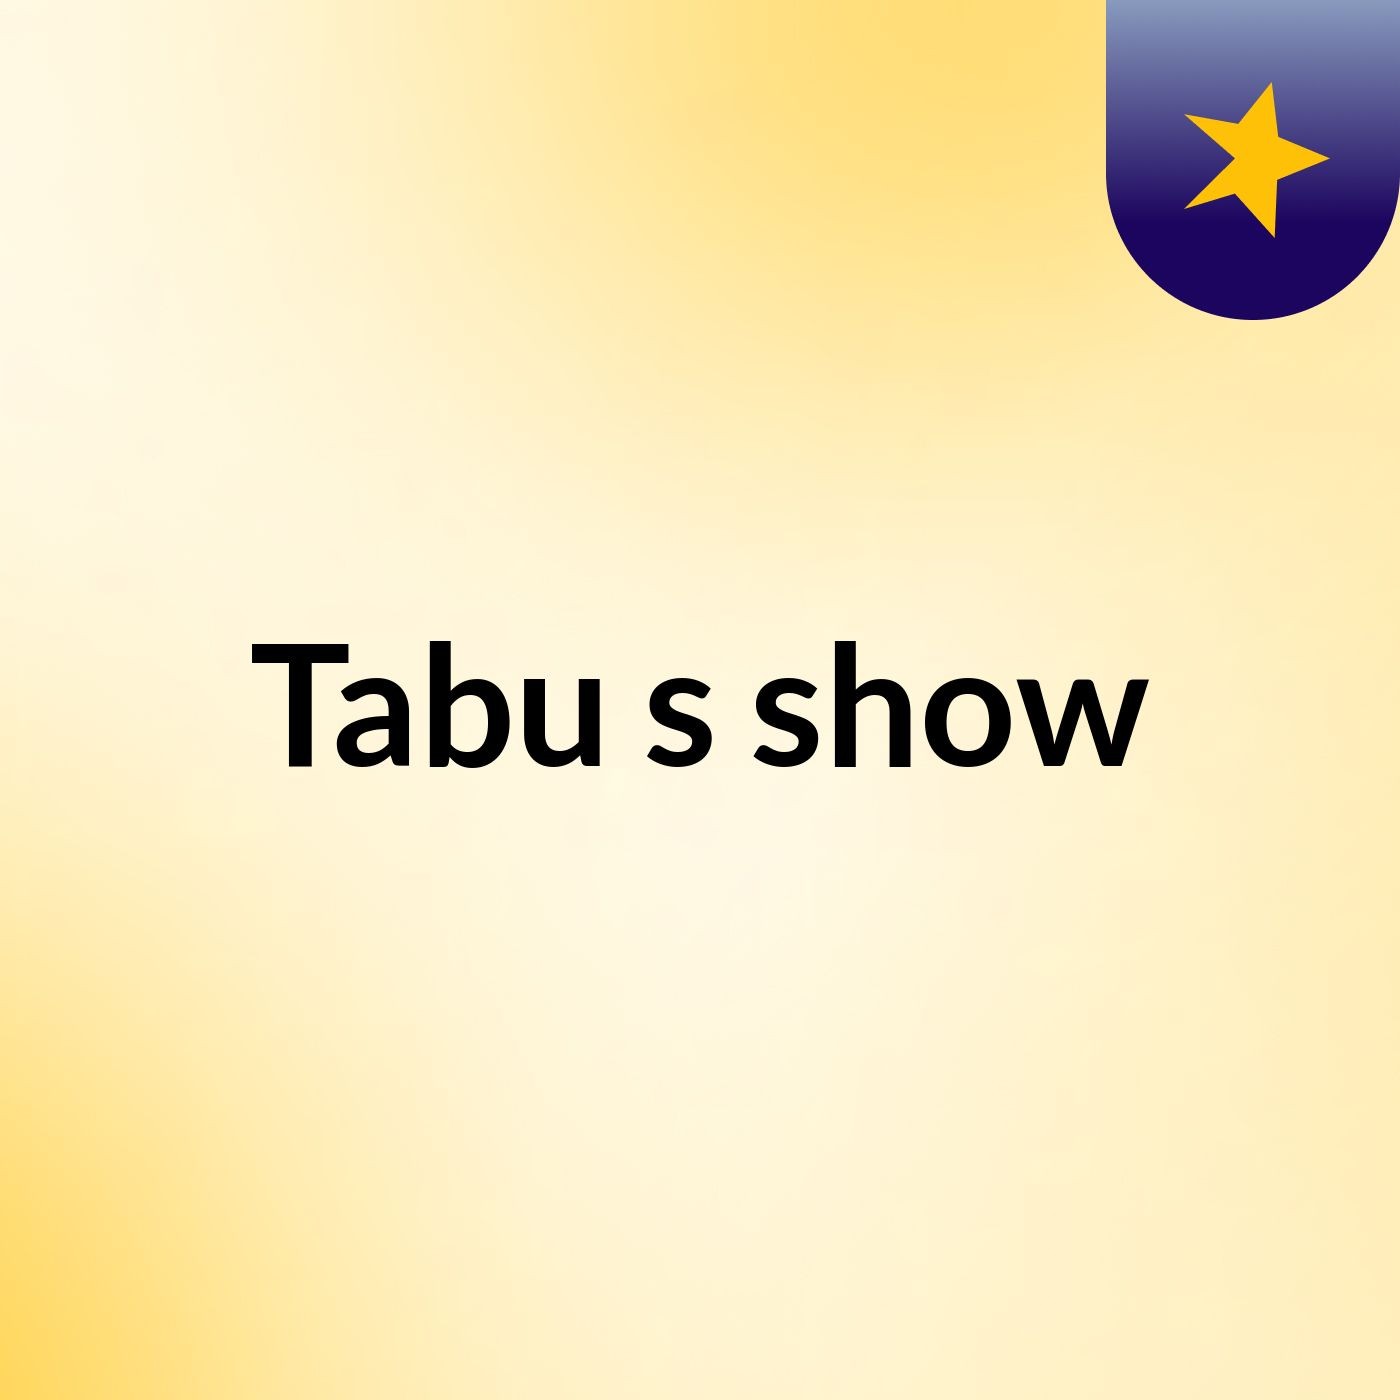 Tabu's show